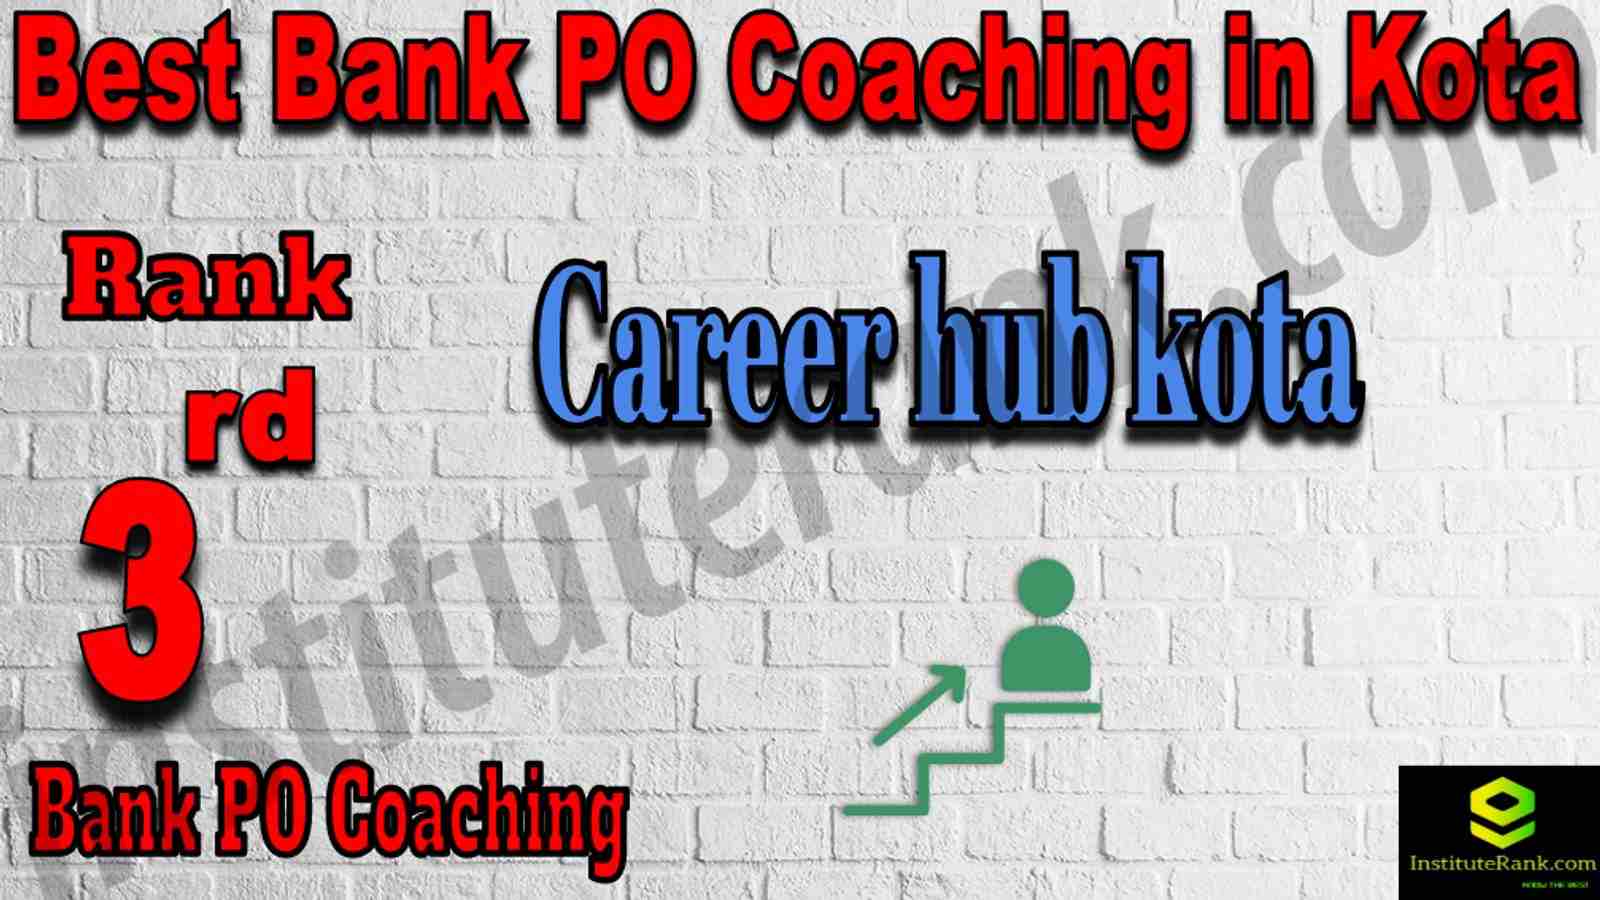 3rd Best Bank PO Coaching in Kota